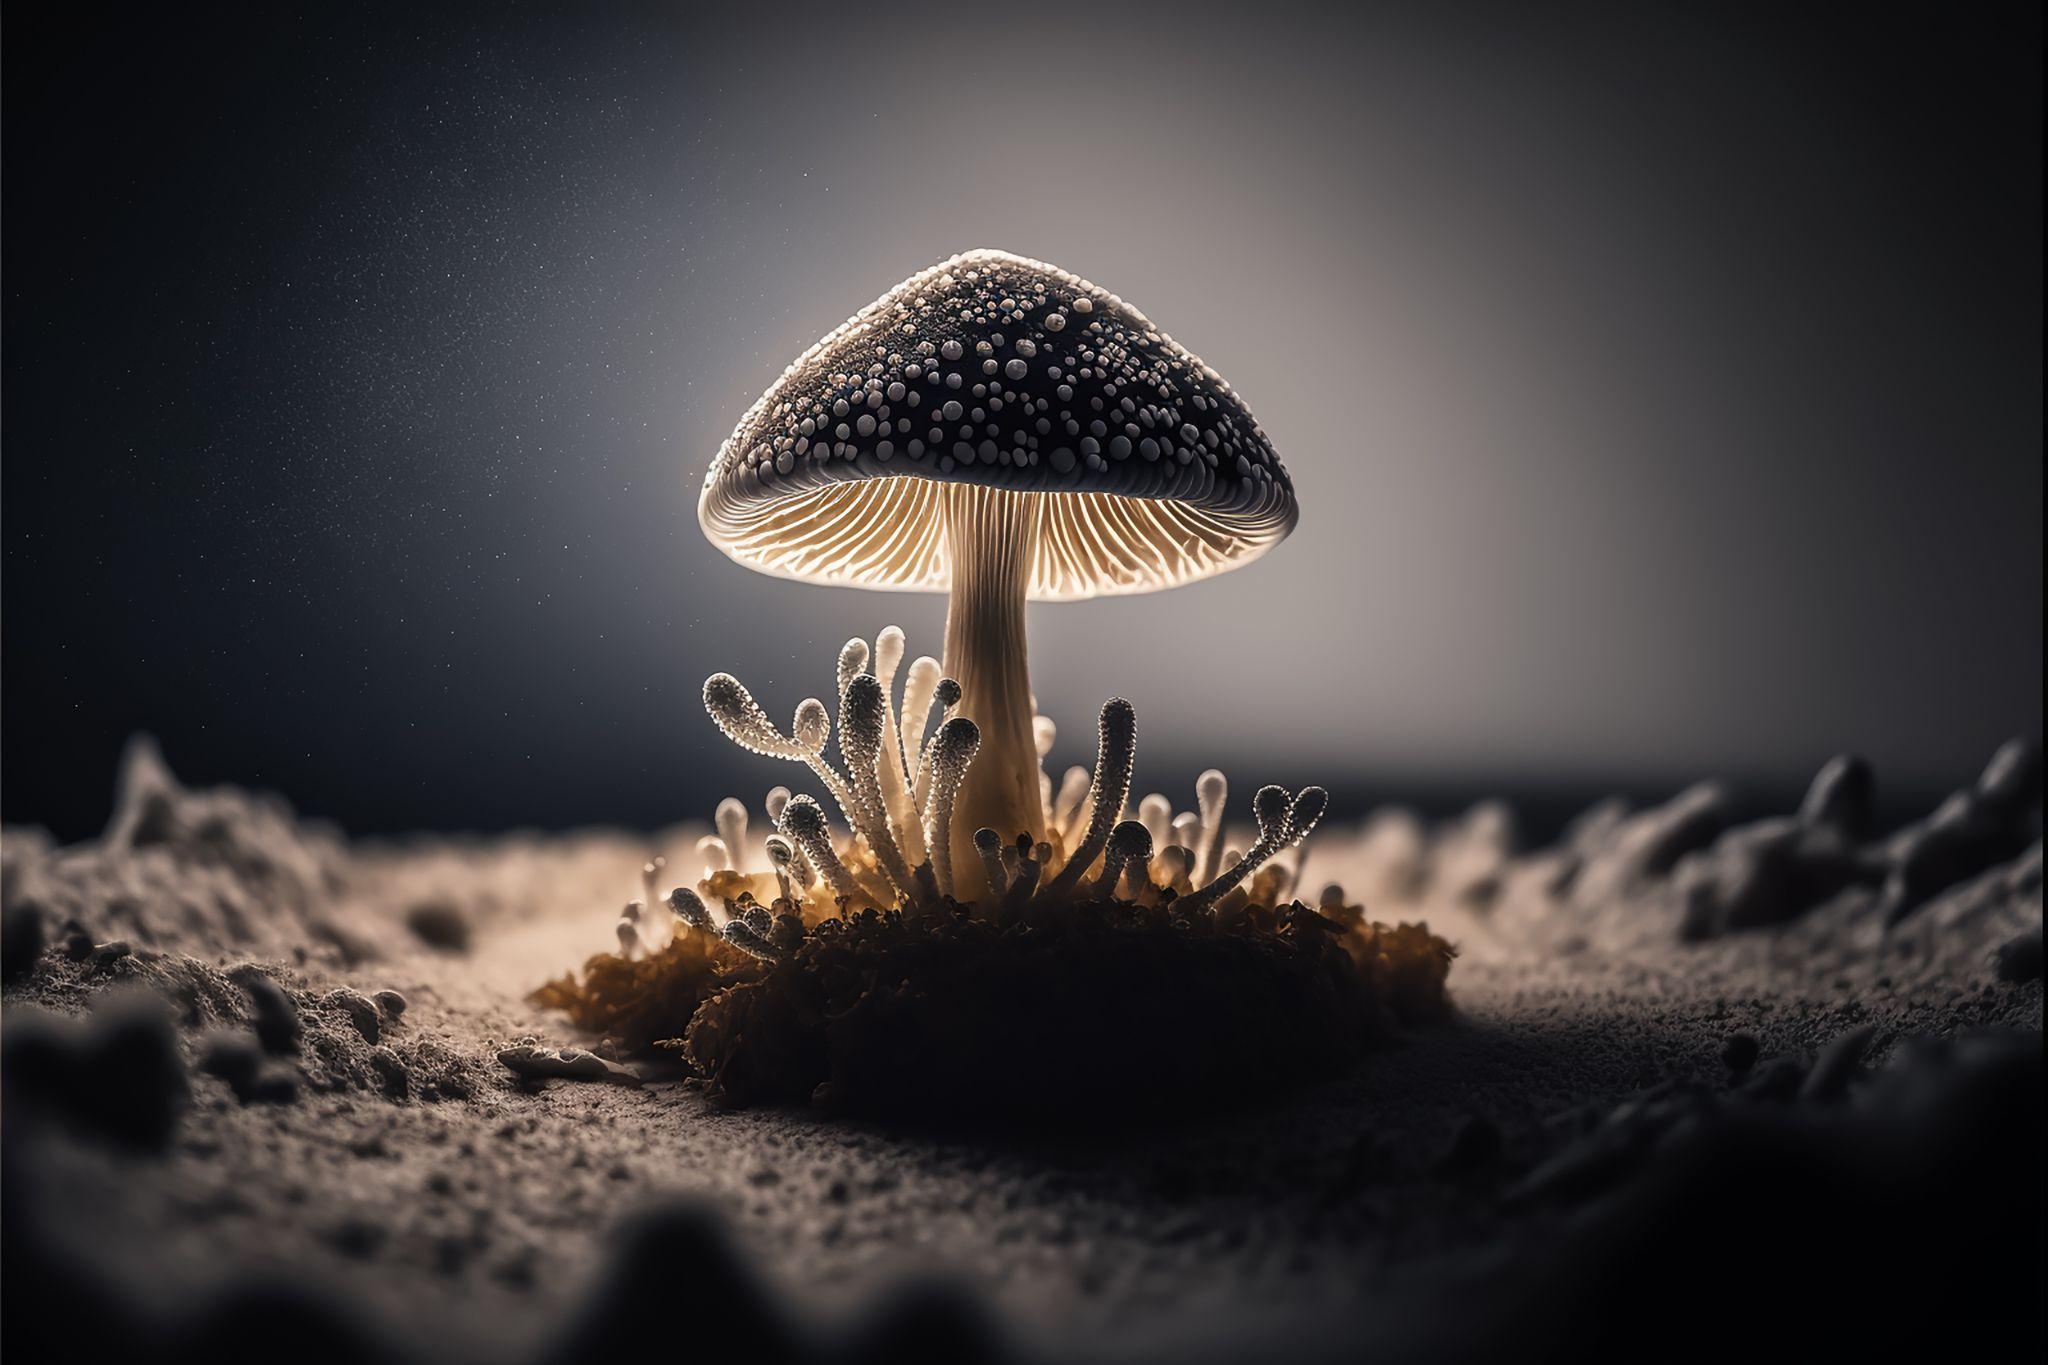 Close up of a psilocybin mushroom on a piece of dirt.